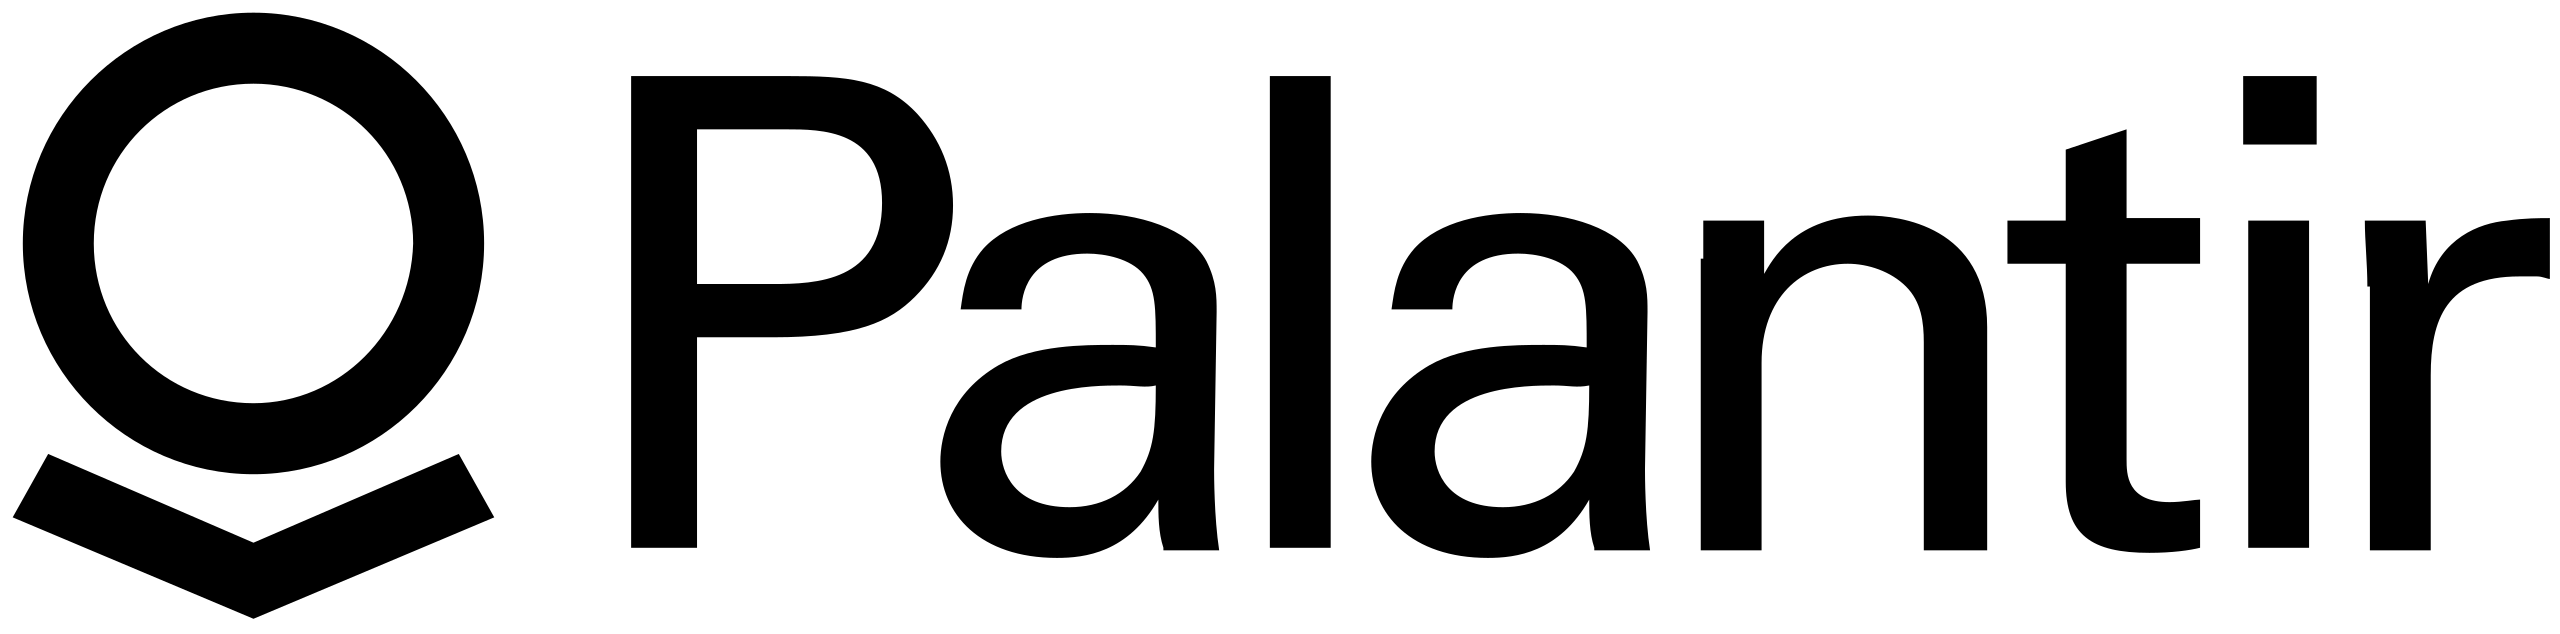 palantir company logo